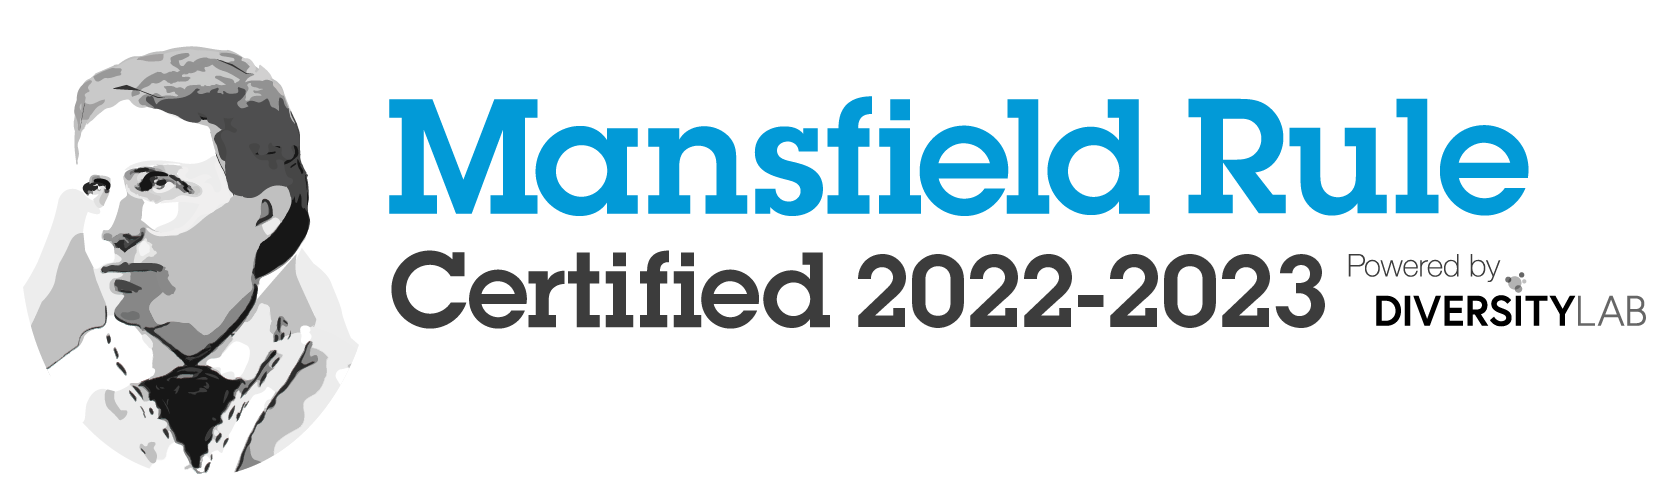 Mansfield Certification 2022-2023 badge